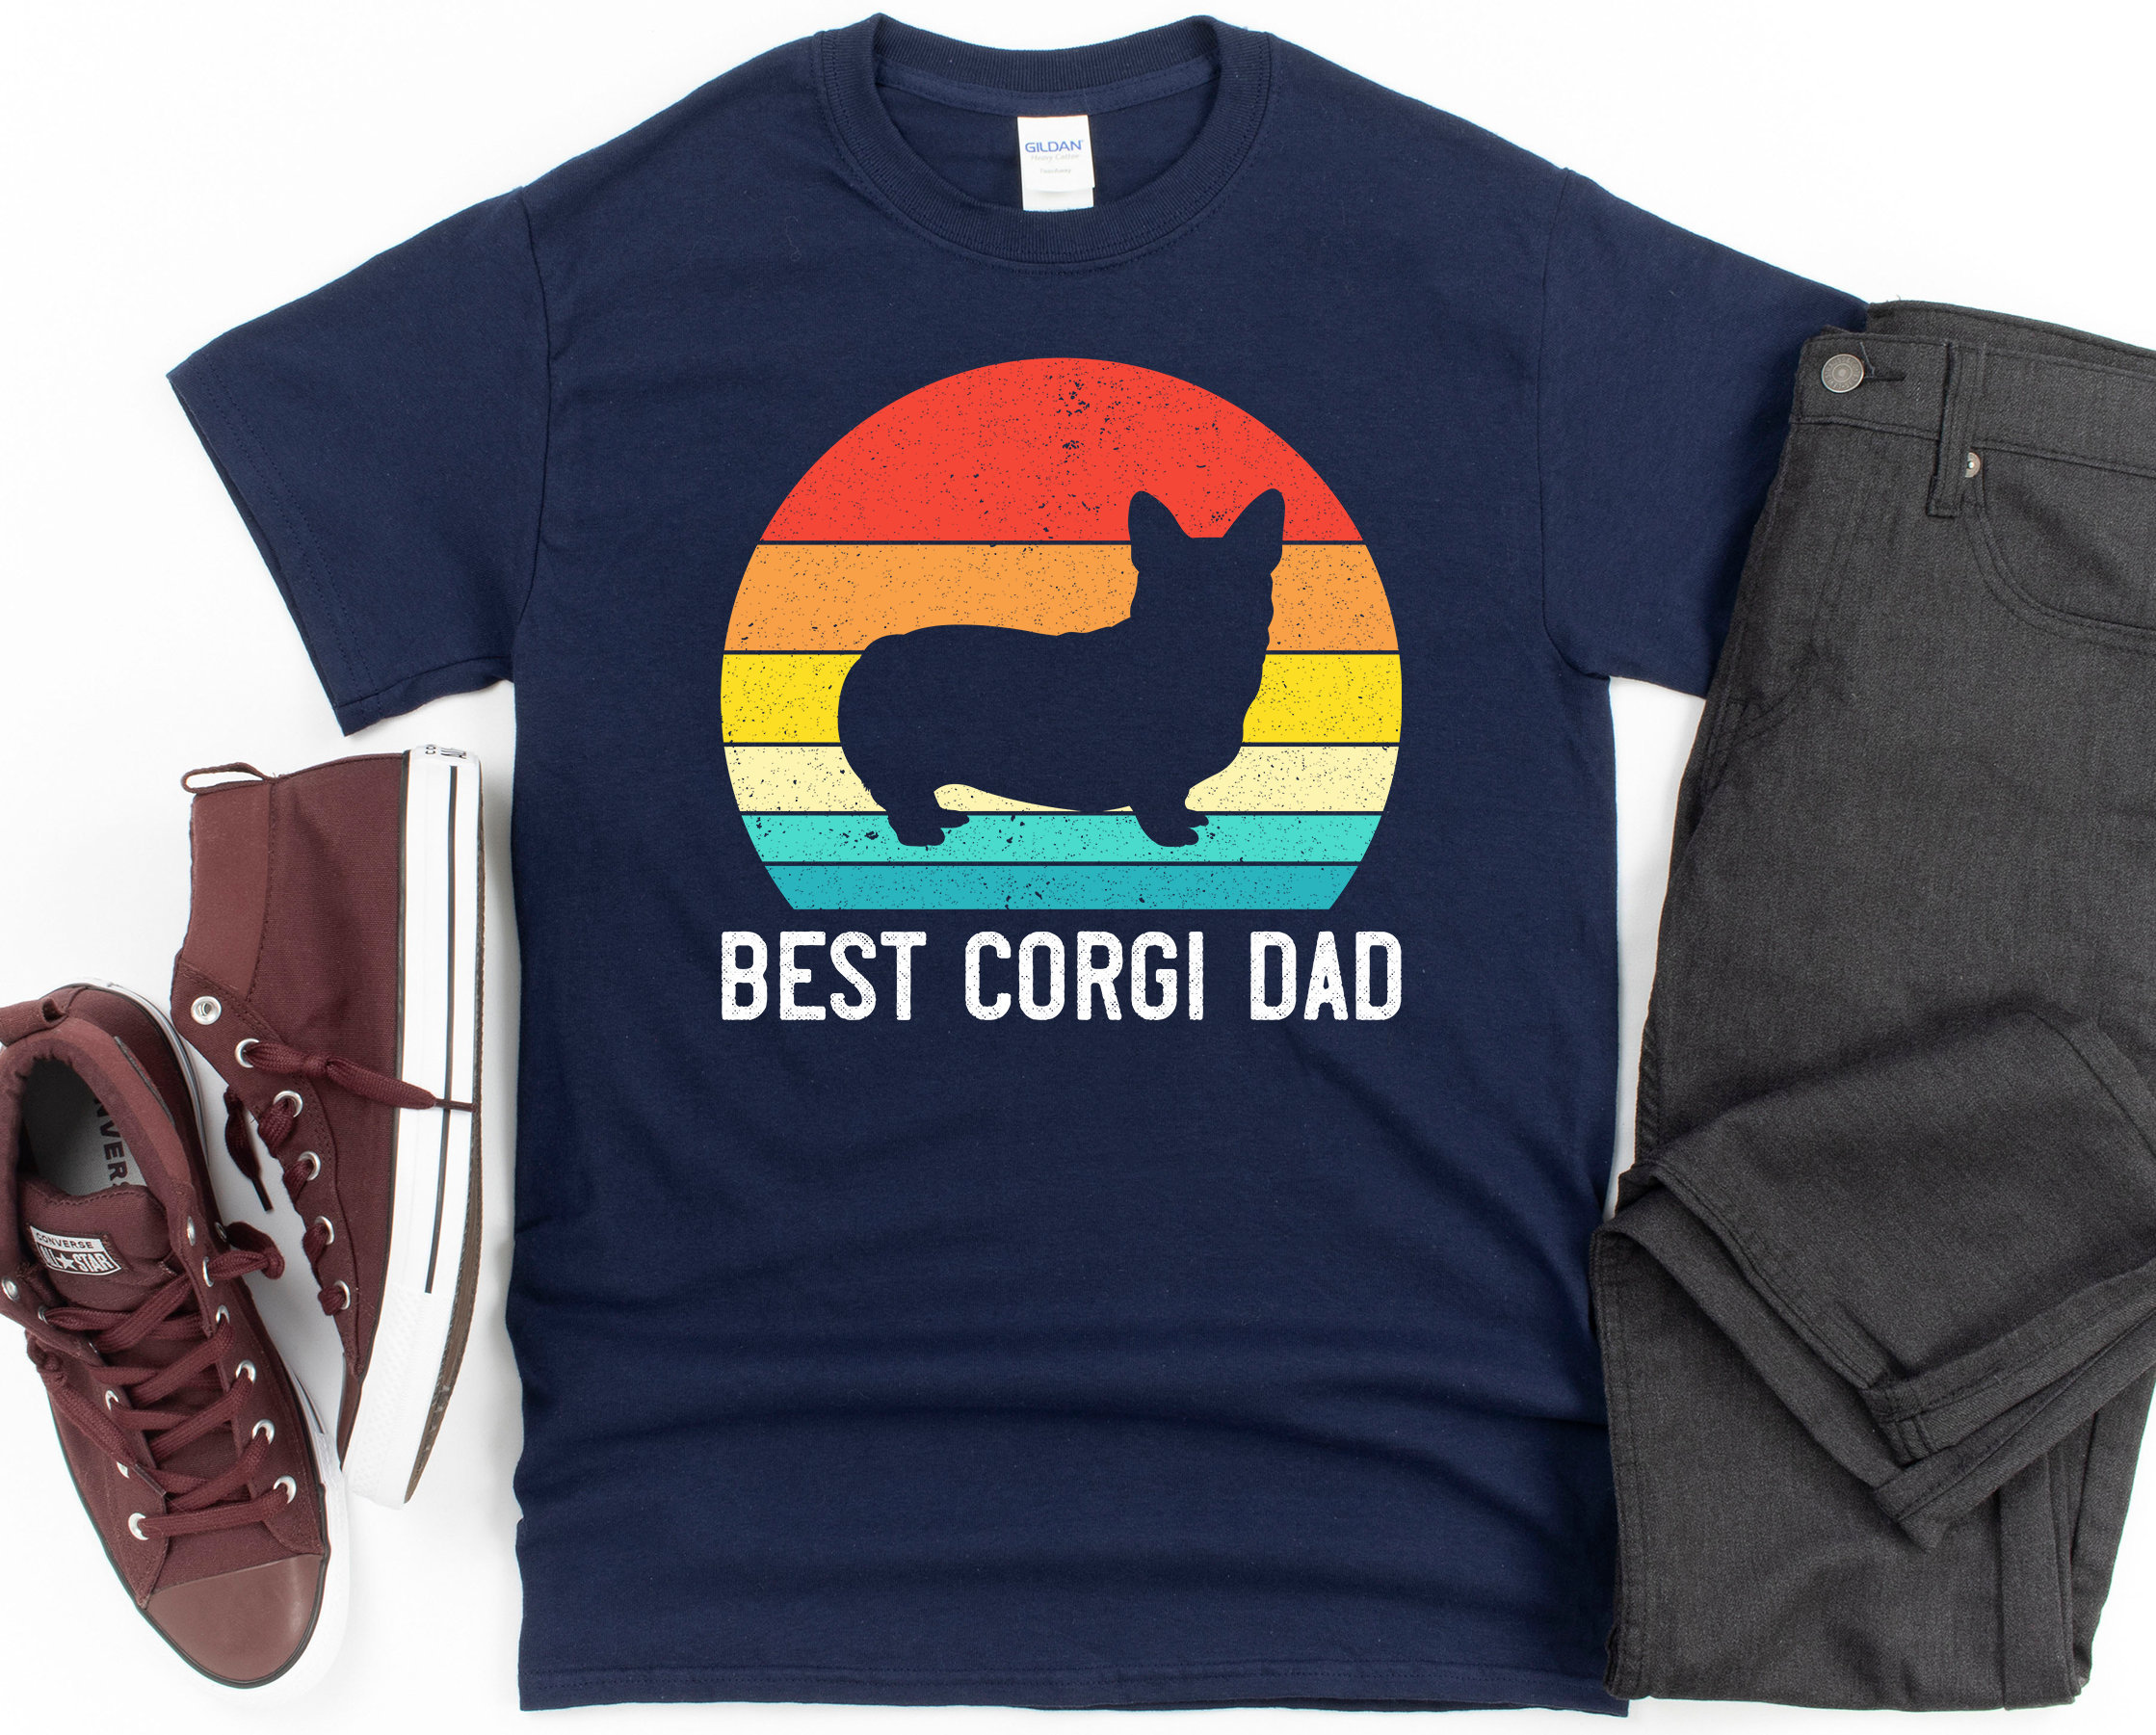 Corgi Father\u2019s Day Gift Tee Corgi Lover Tshirt Best Corgi Dad Ever Shirt Corgi Gifts for Him Corgi Owner Tee Funny Men\u2019s Corgi T-shirt